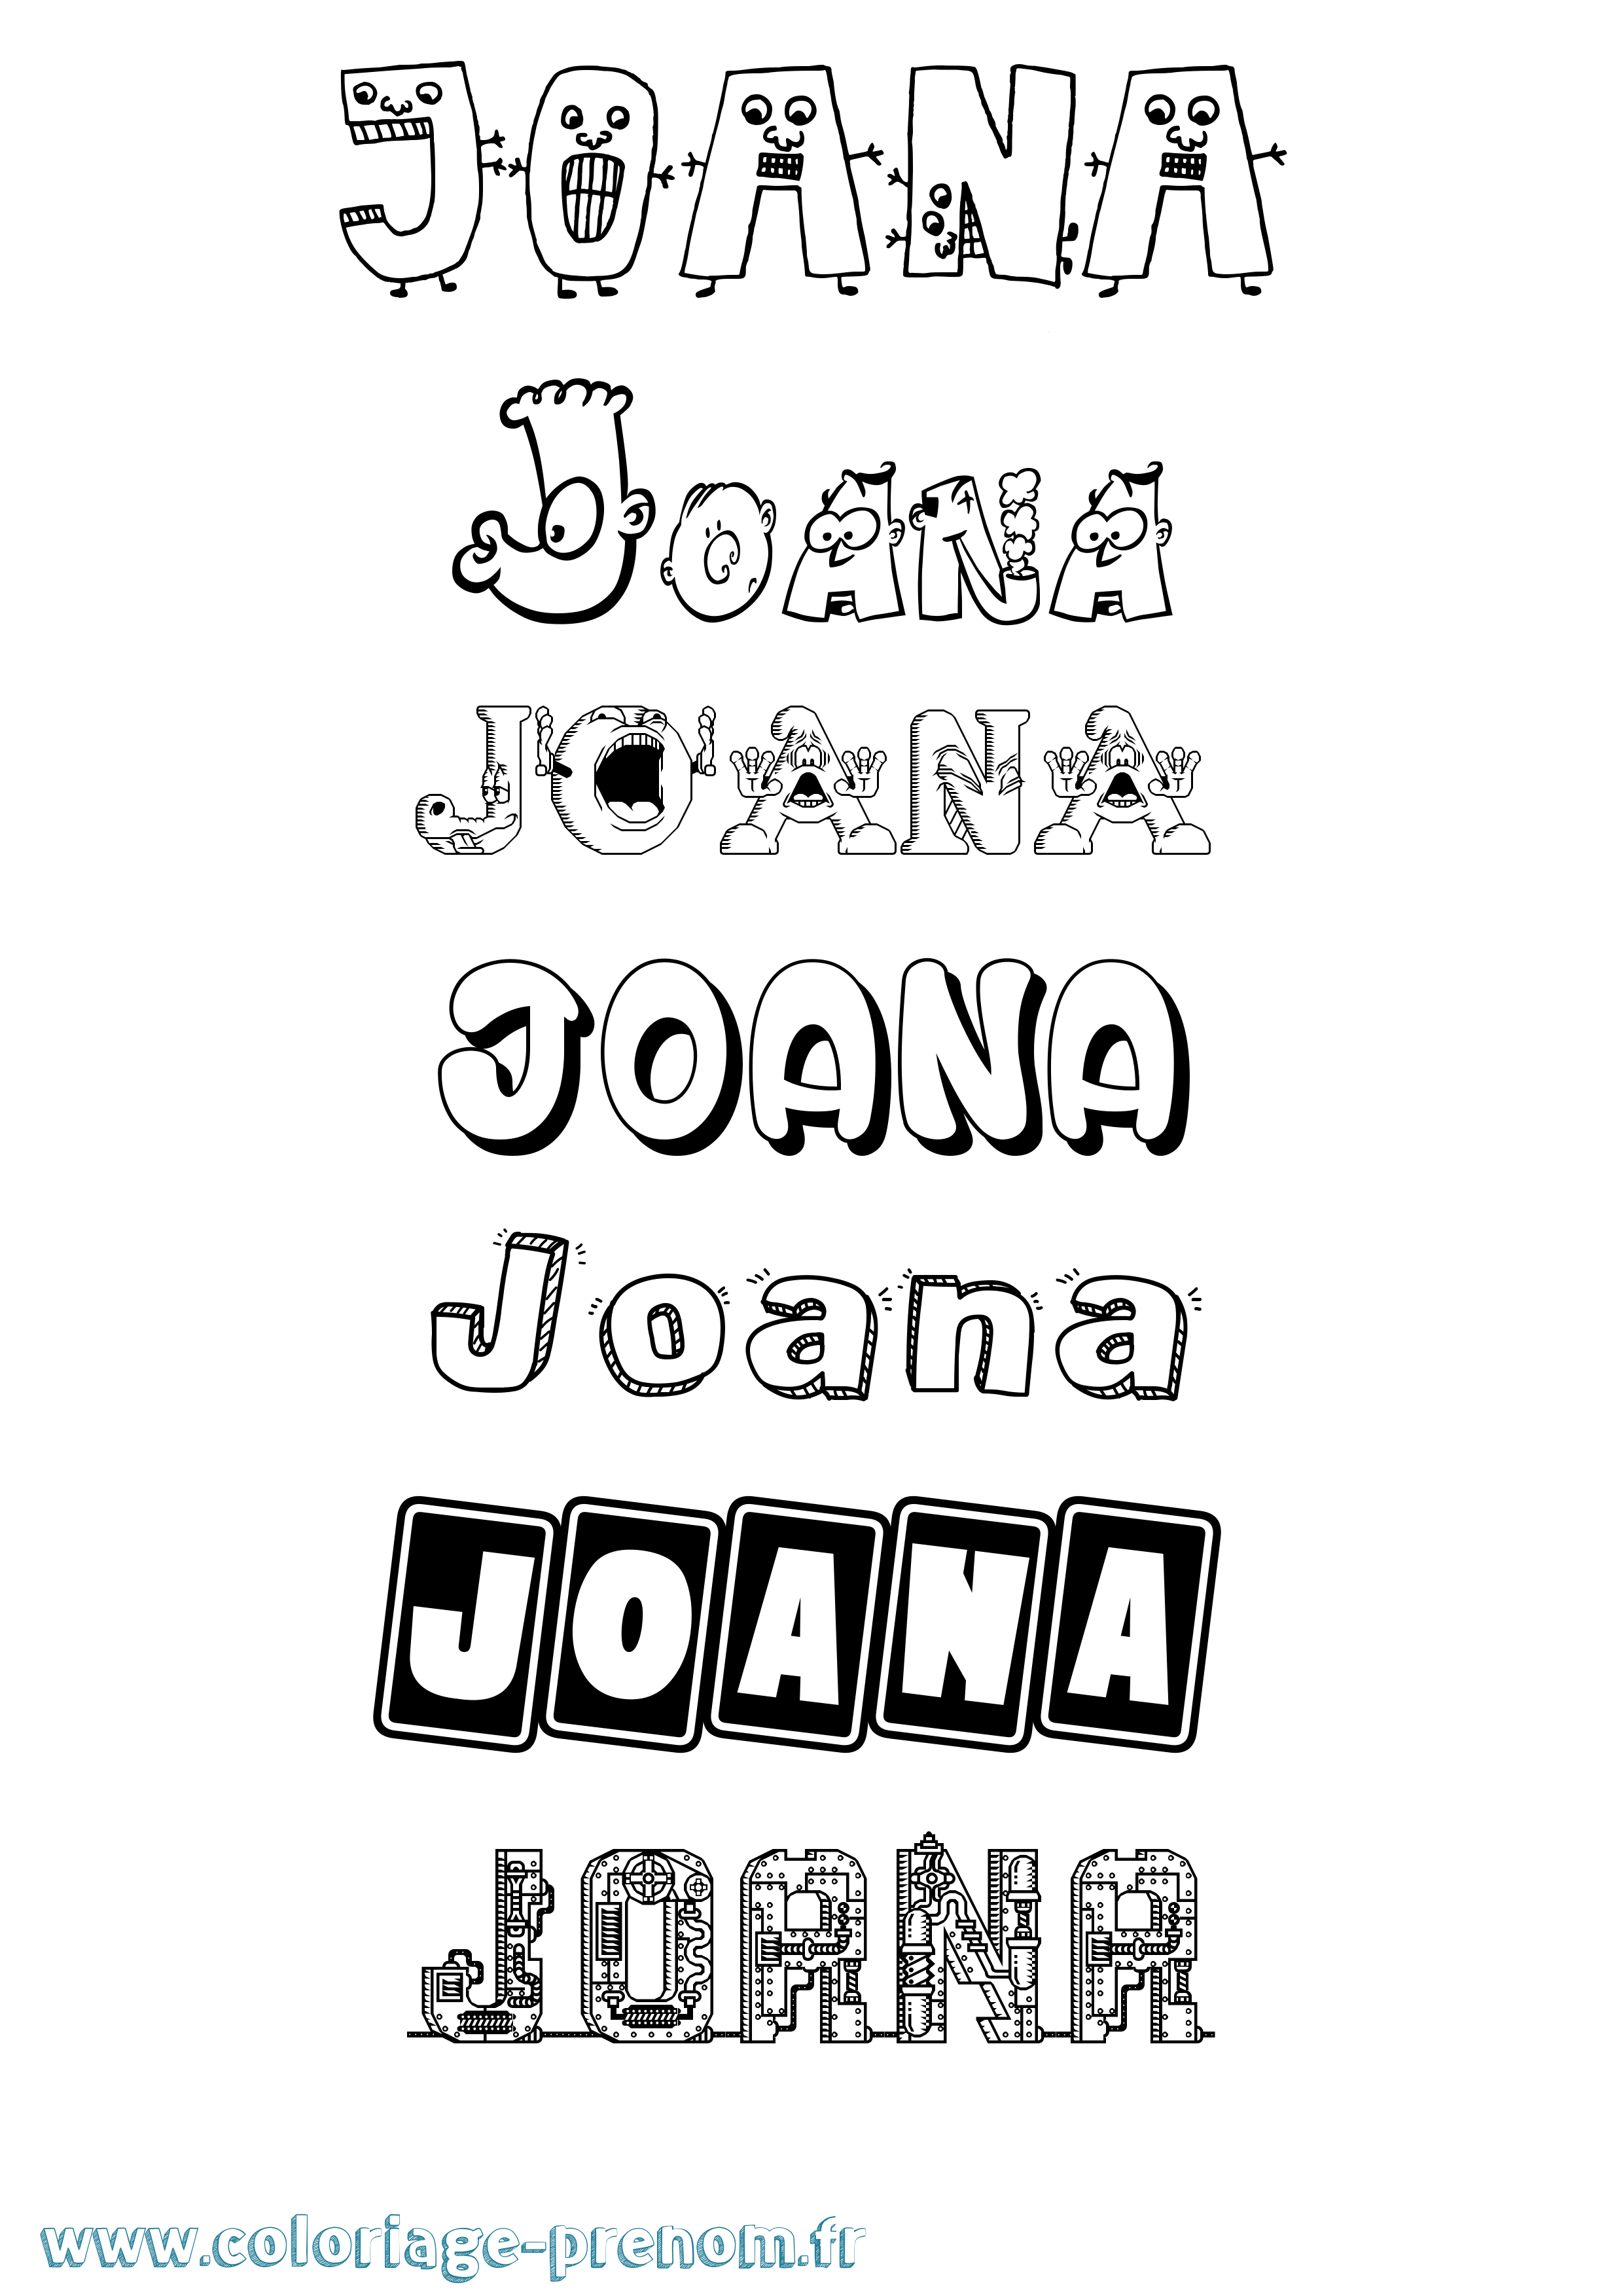 Coloriage prénom Joana Fun